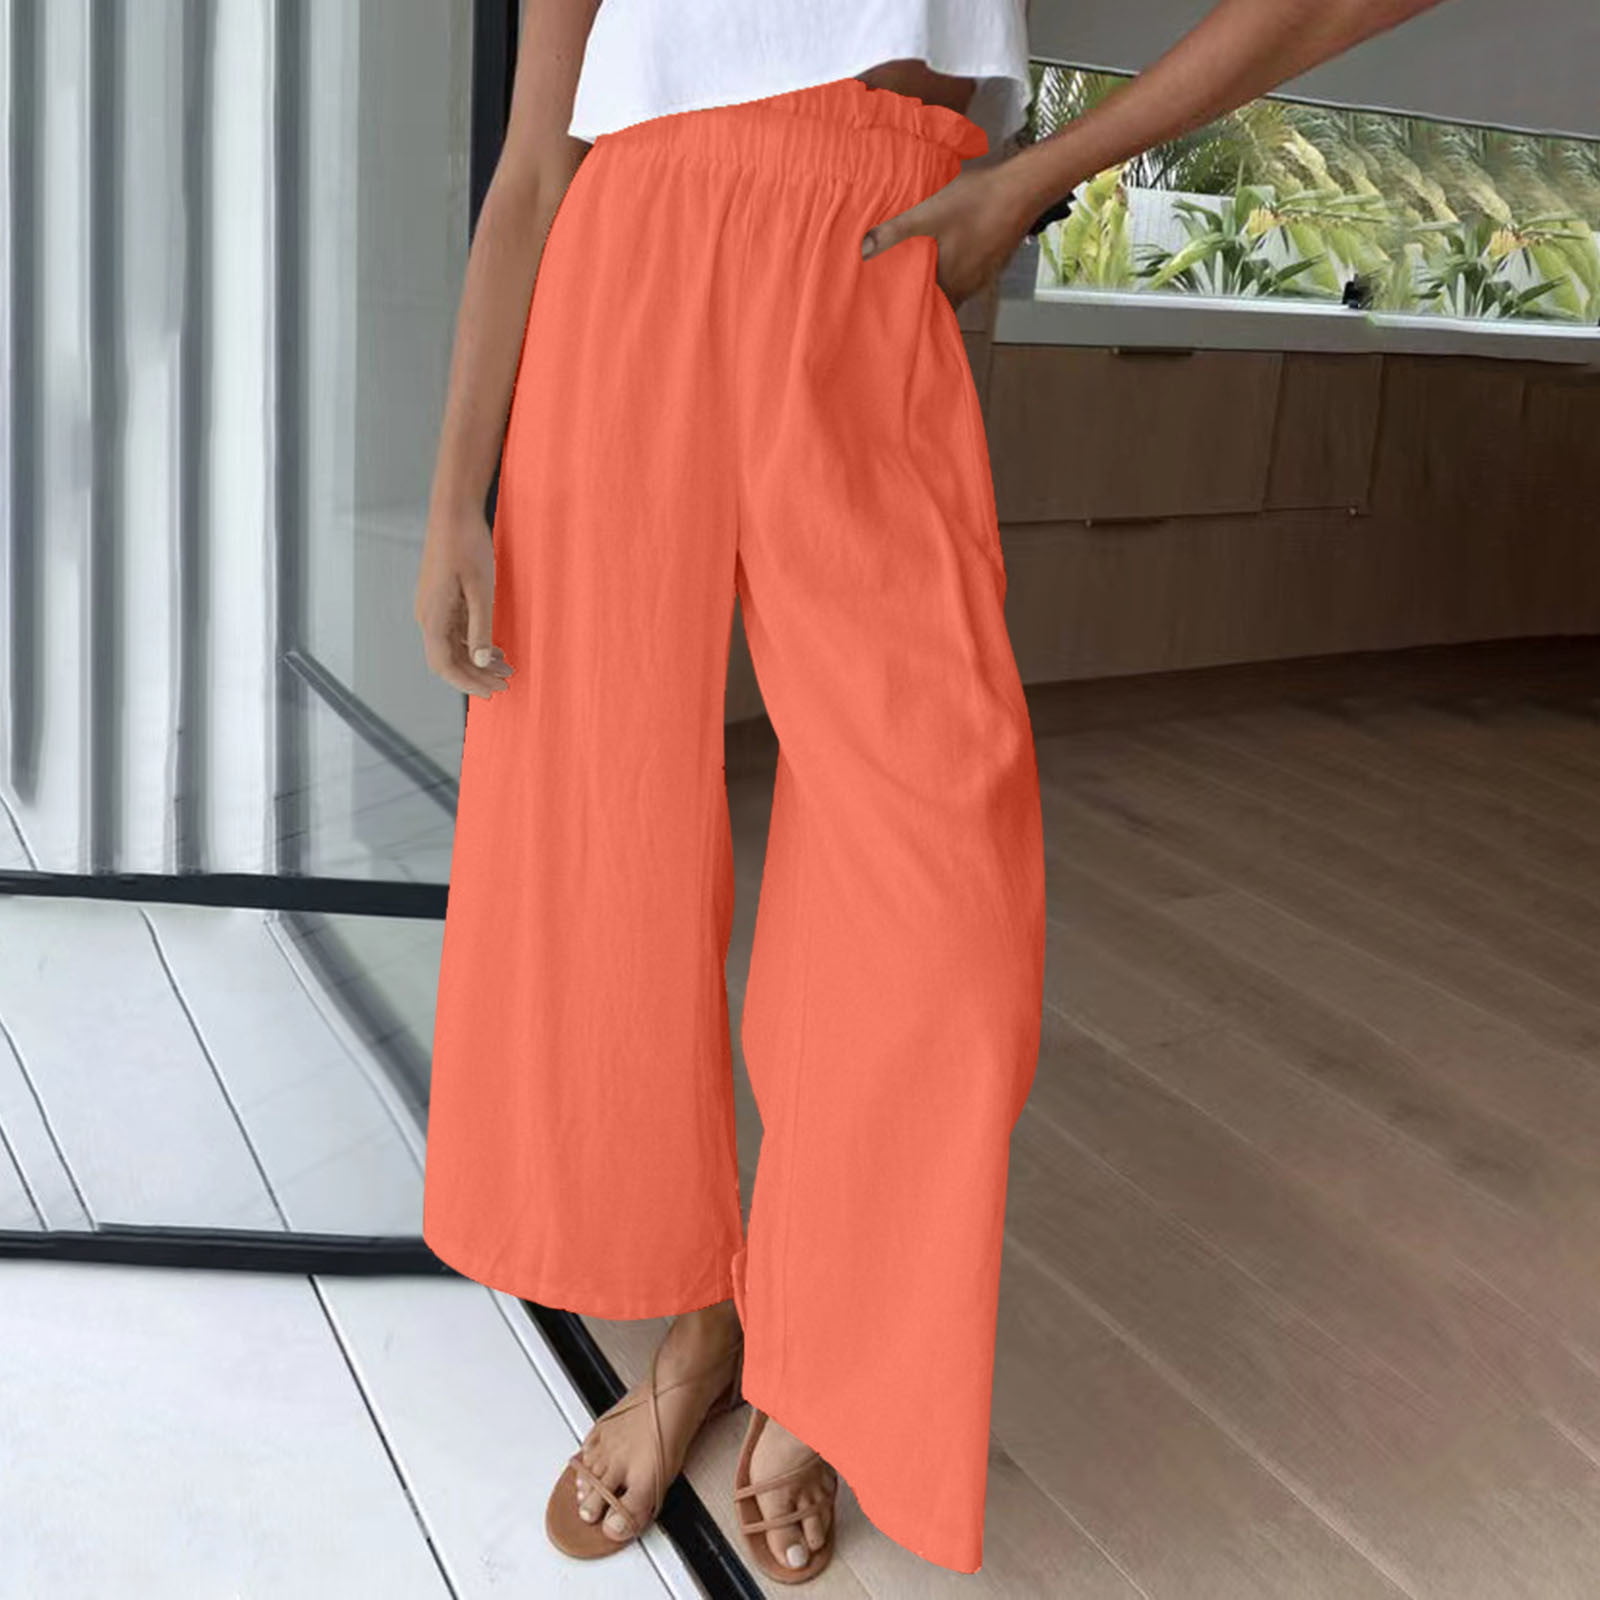 Zpanxa Women's Slacks Fashion Casual Solid Color Elastic Cotton